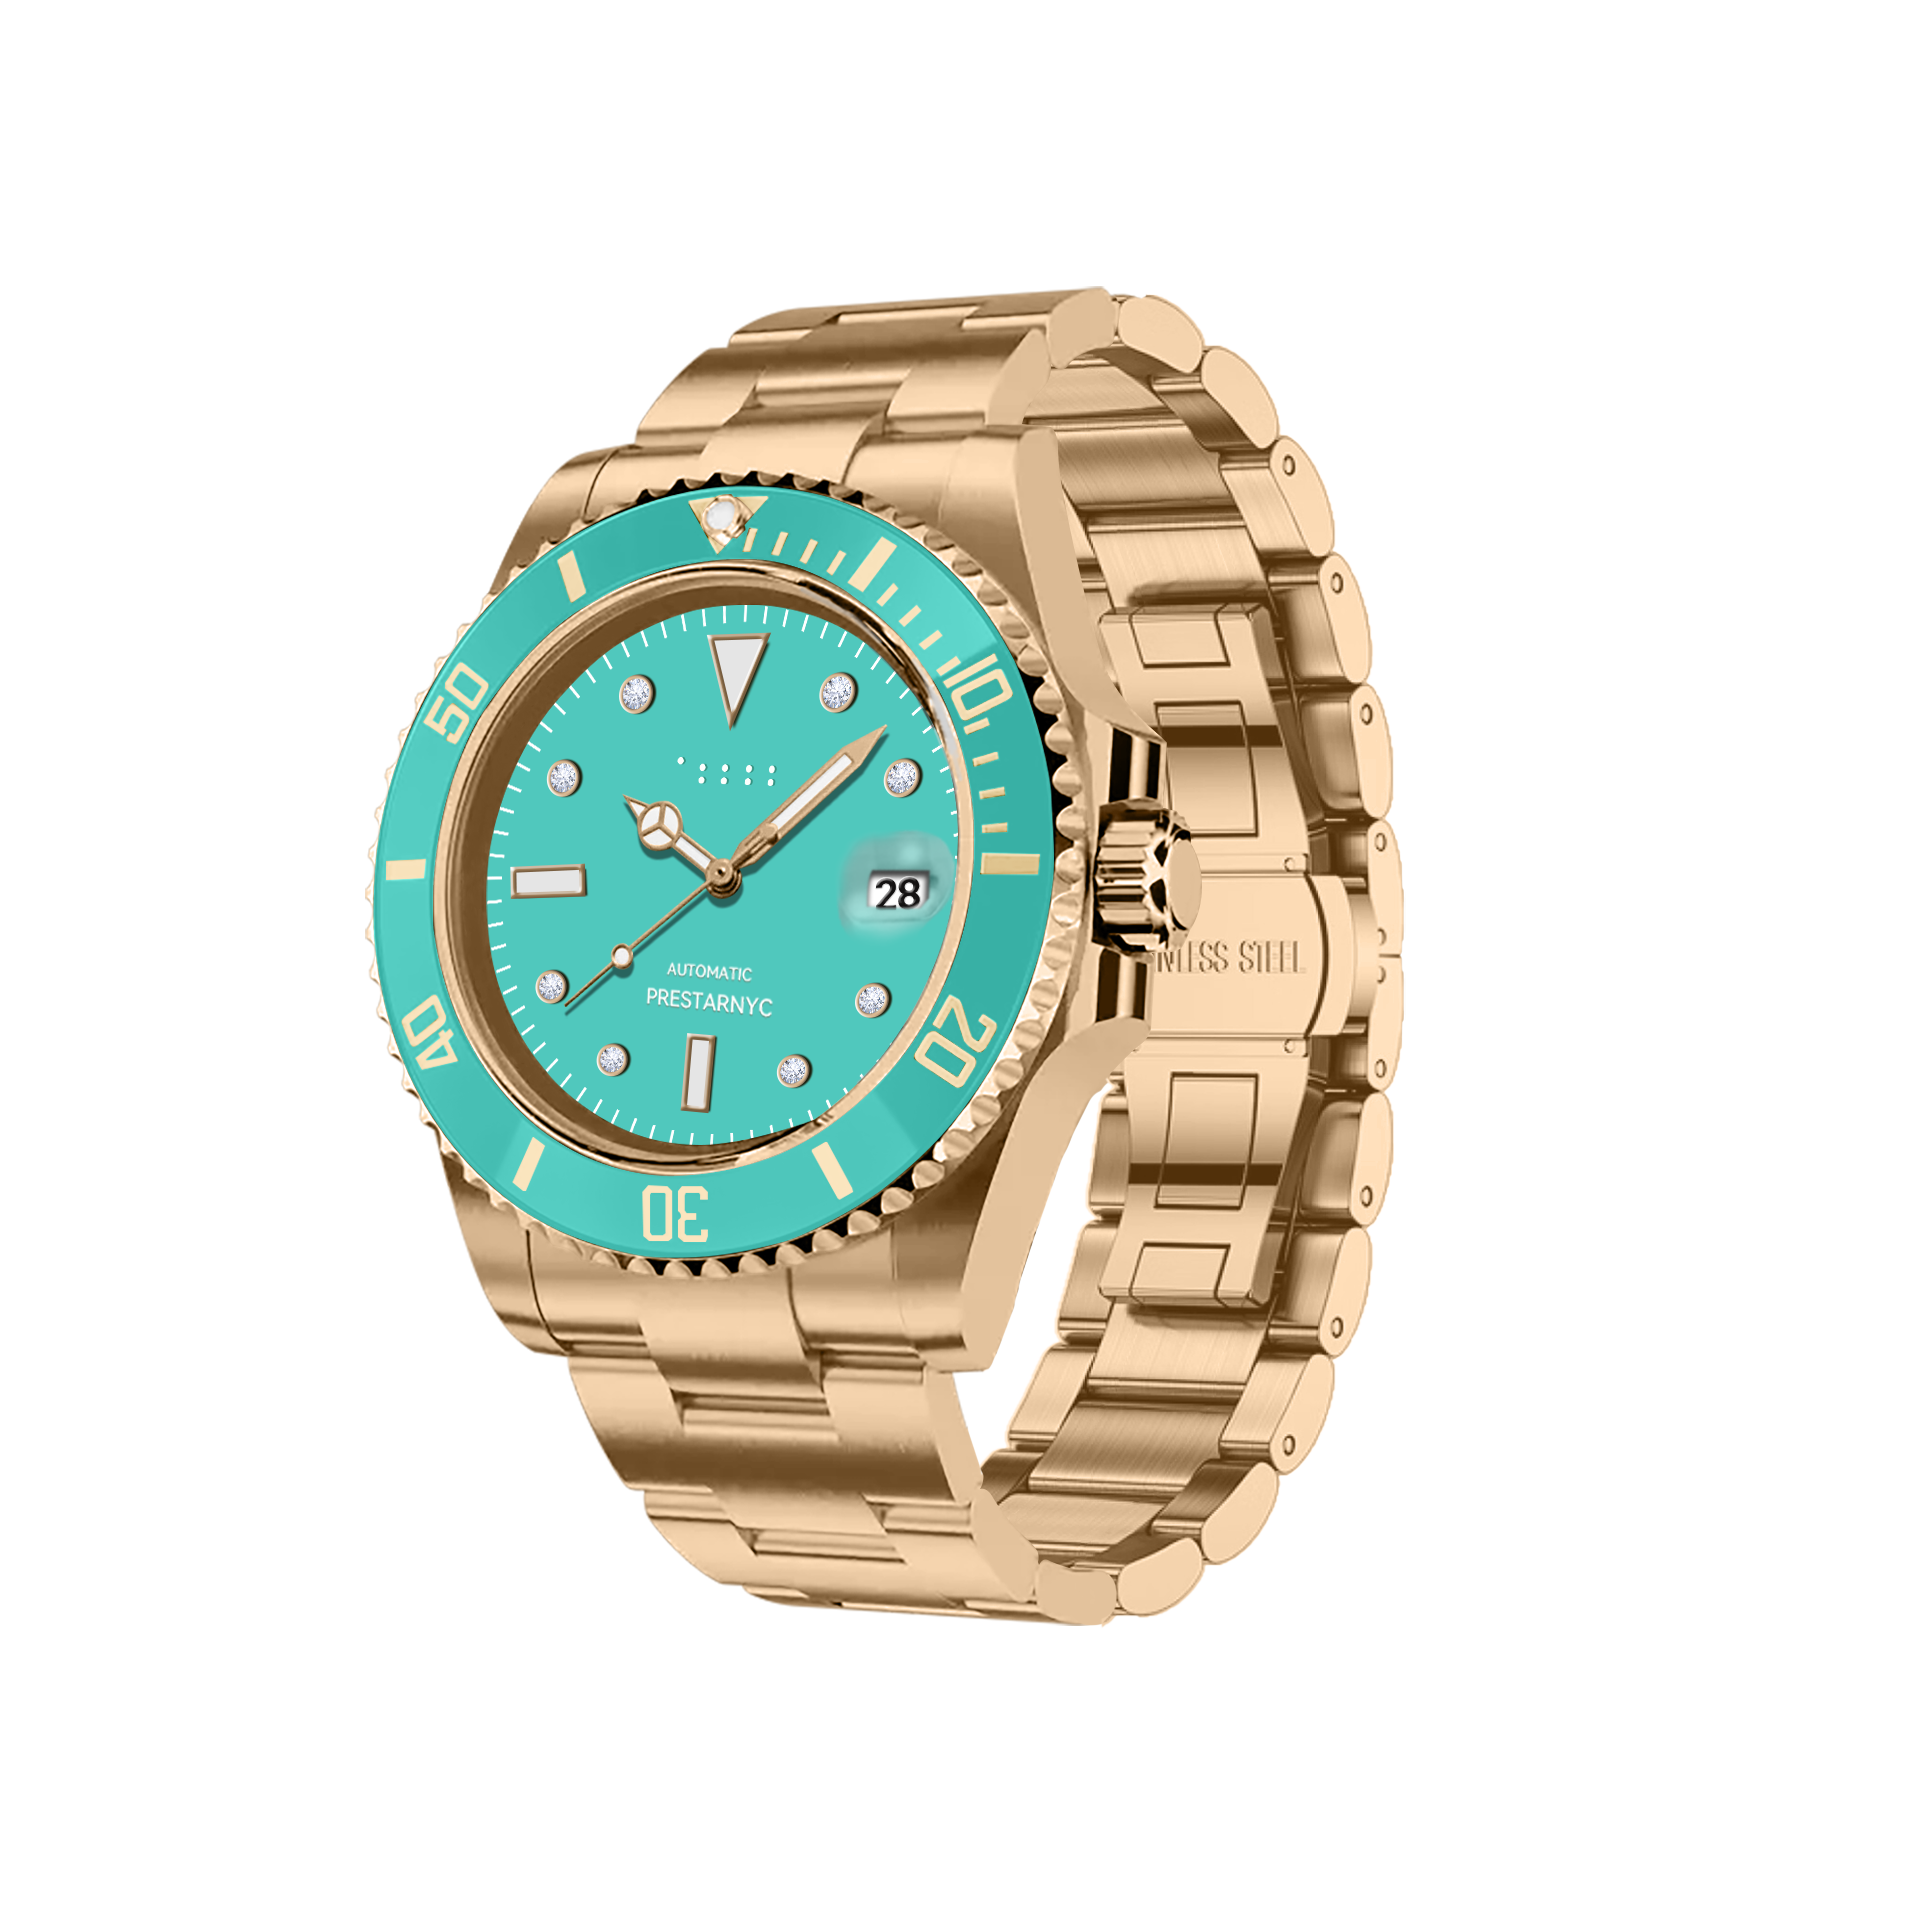 Prestar NYC Aquaman Classic Gemstone Gold Watch (Blue Turquoise)